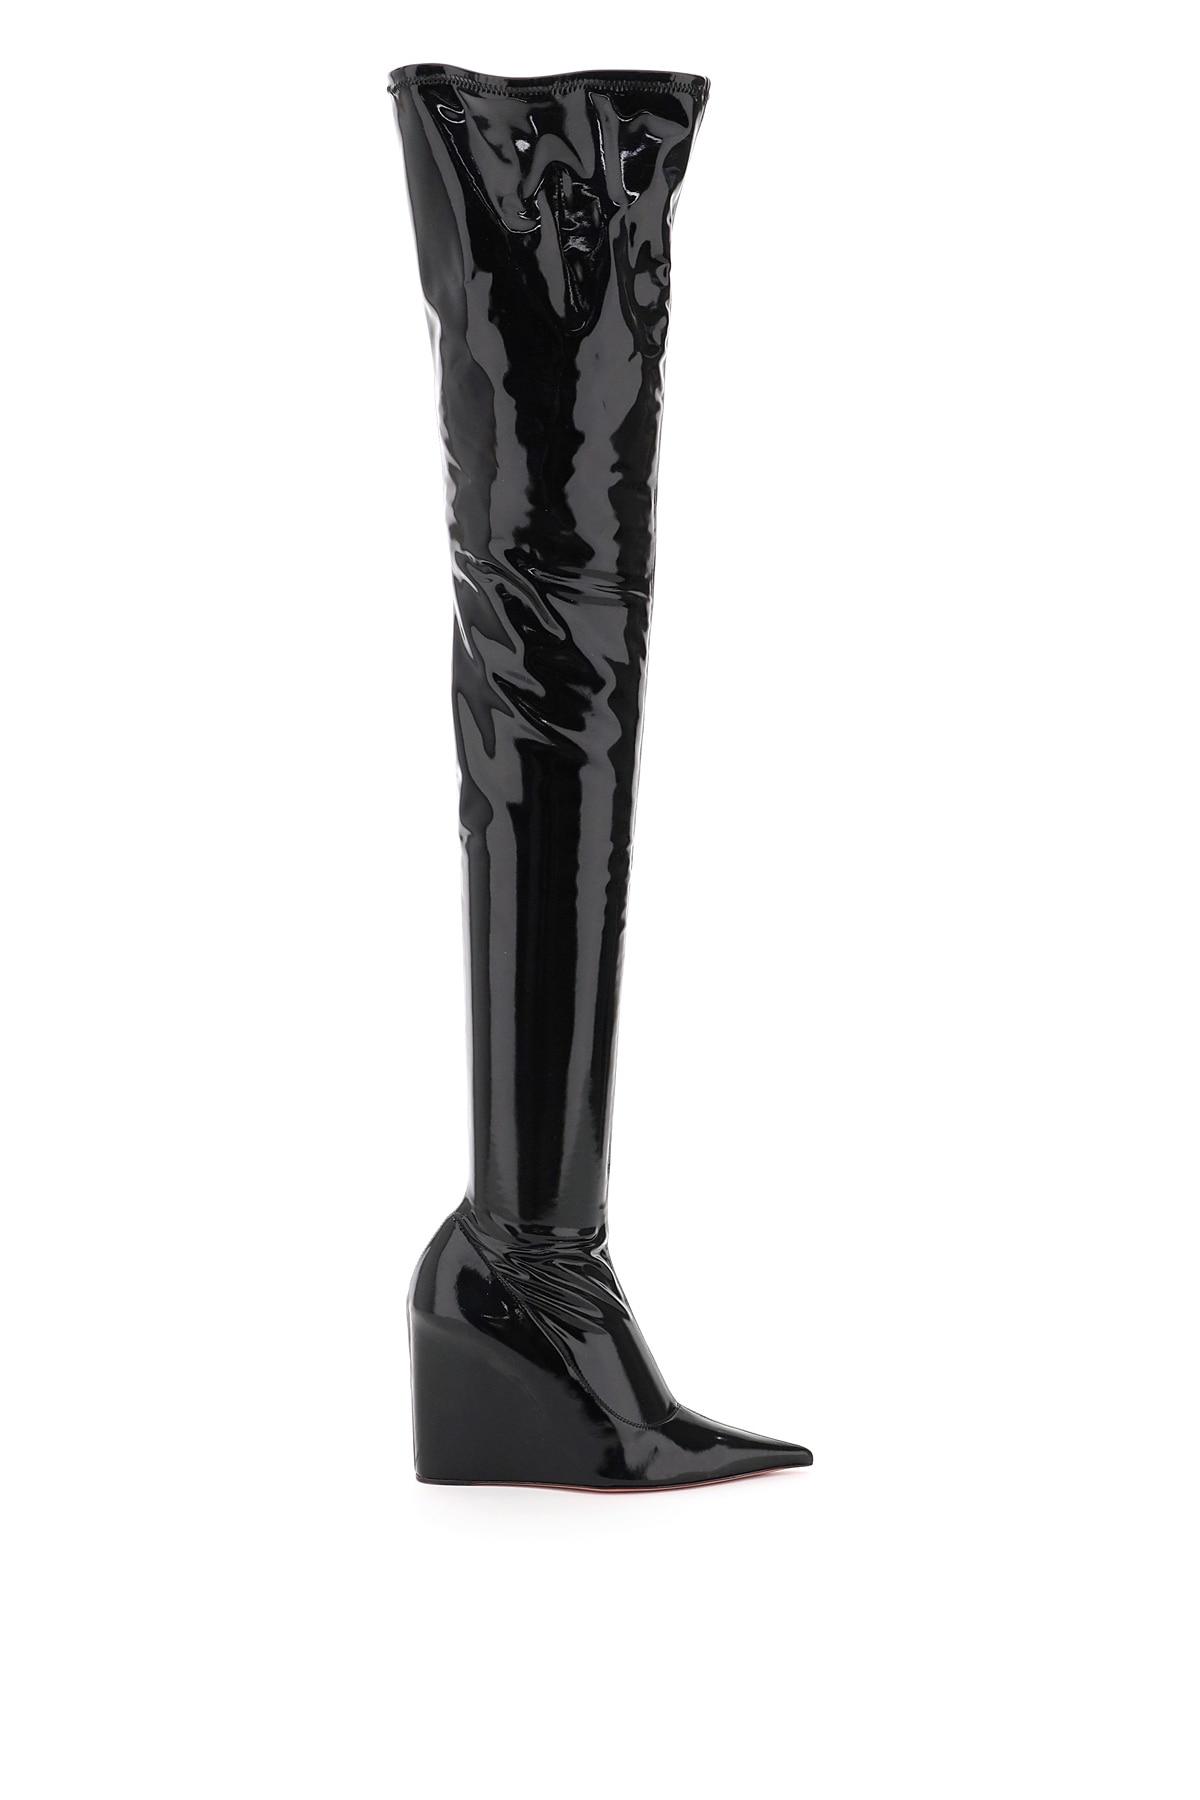 AMINA MUADDI Leather Danielle Thigh High Latex Boots in Black | Lyst UK